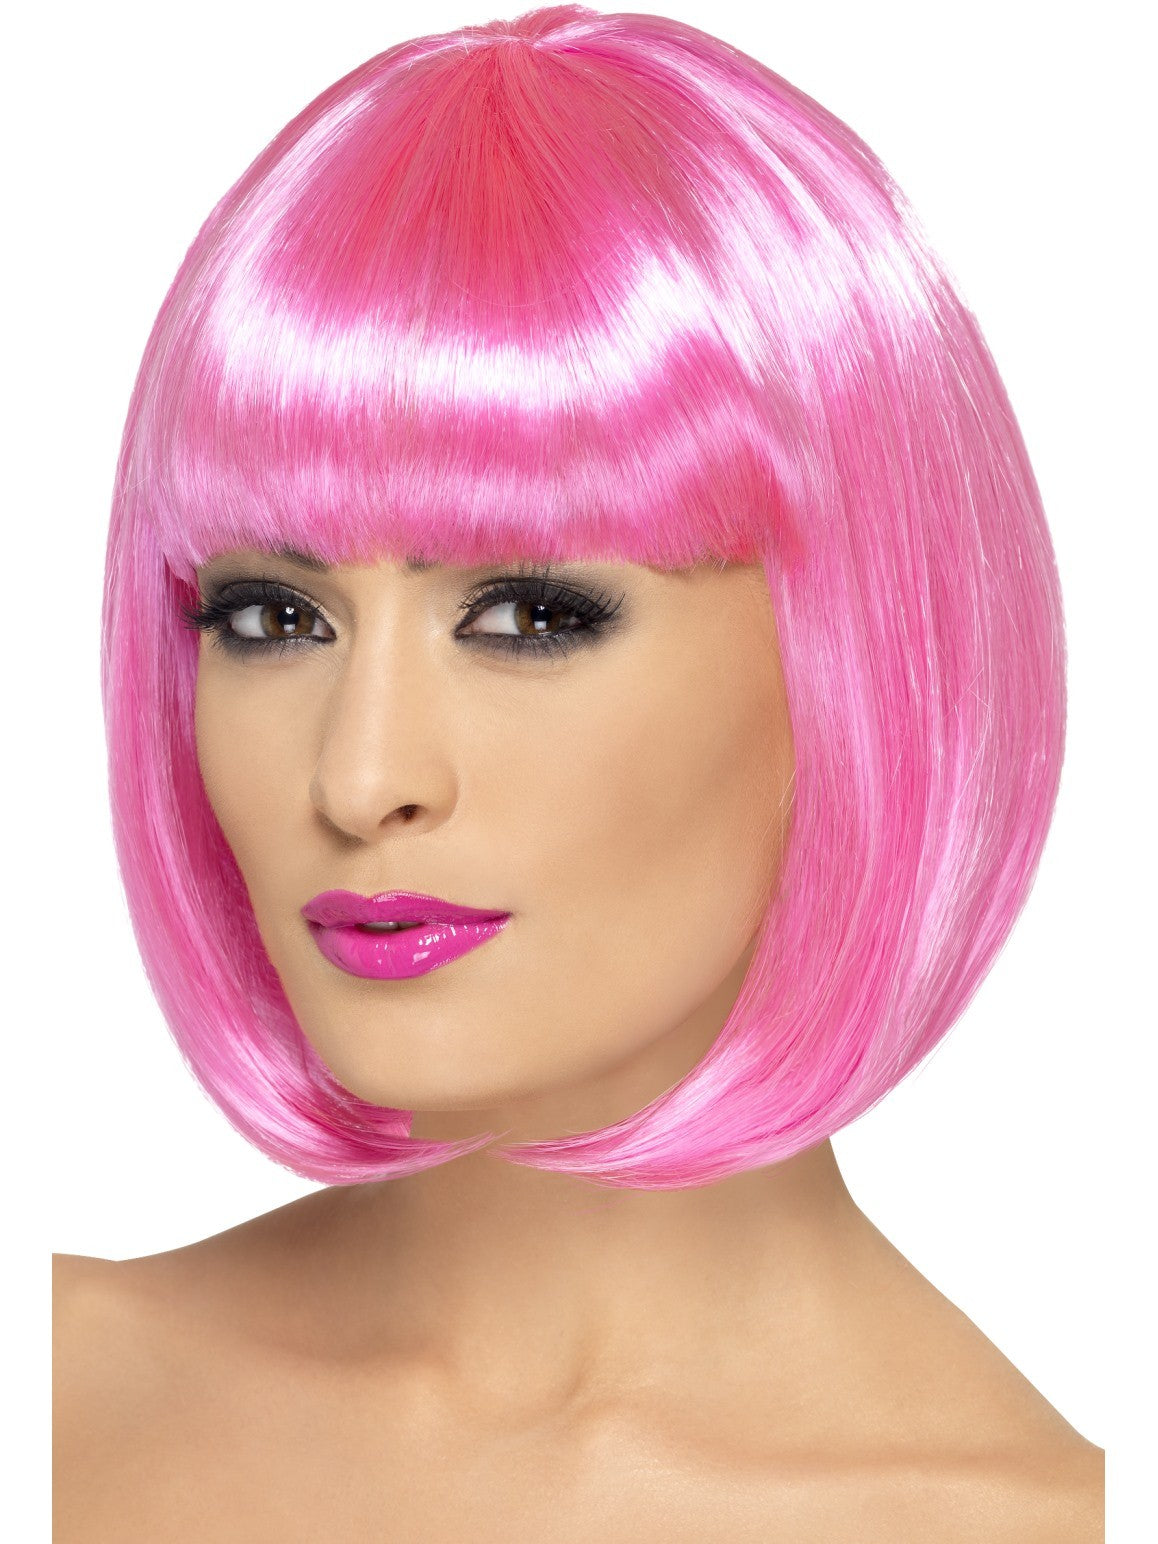 Pink Short Bob Music Festival Wig 12" Length Straight Hair Costume Wig